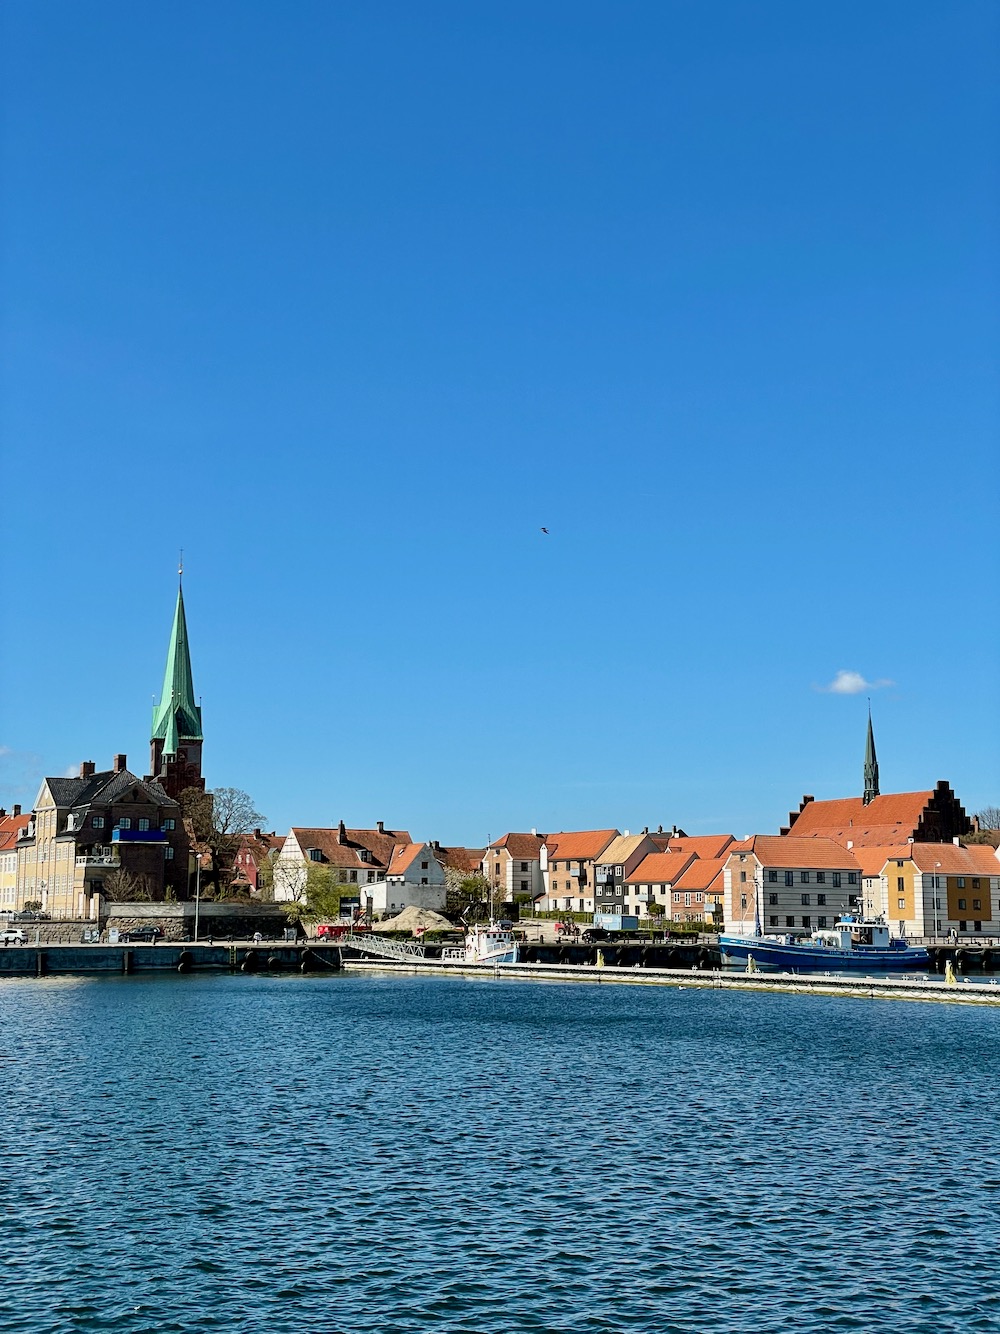 Town near Kronborg castle